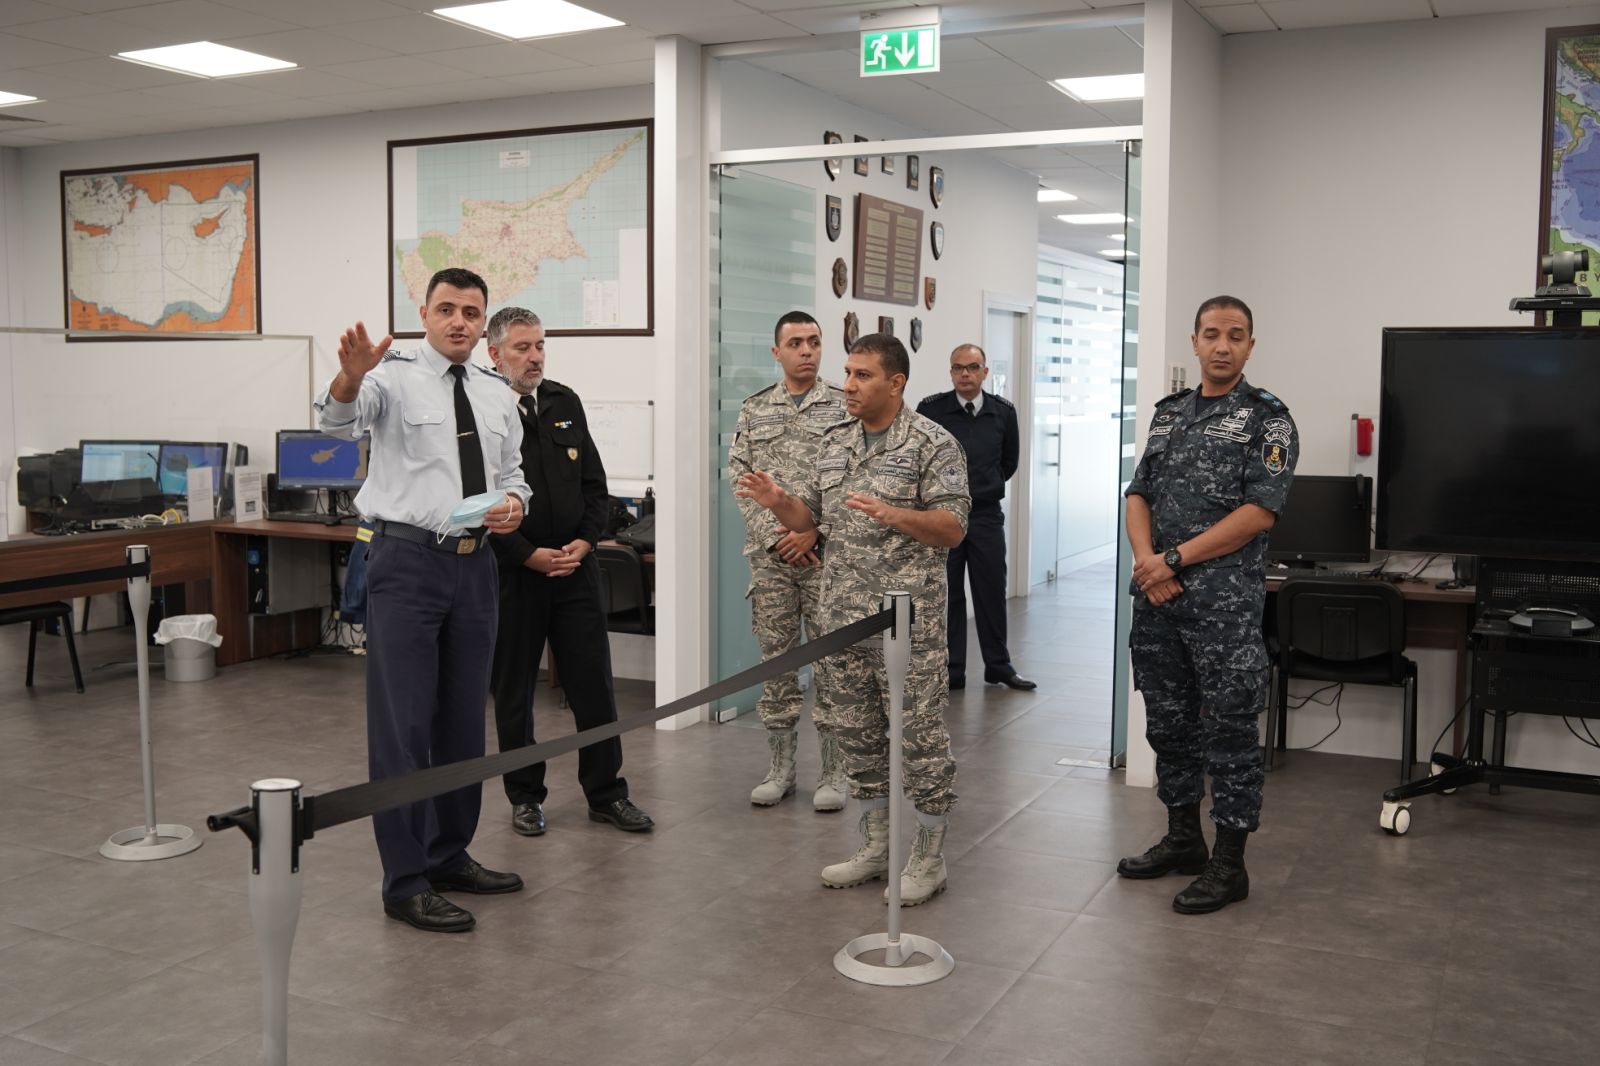 Visit of Commander of JRCC Cairo at JRCC Larnaca